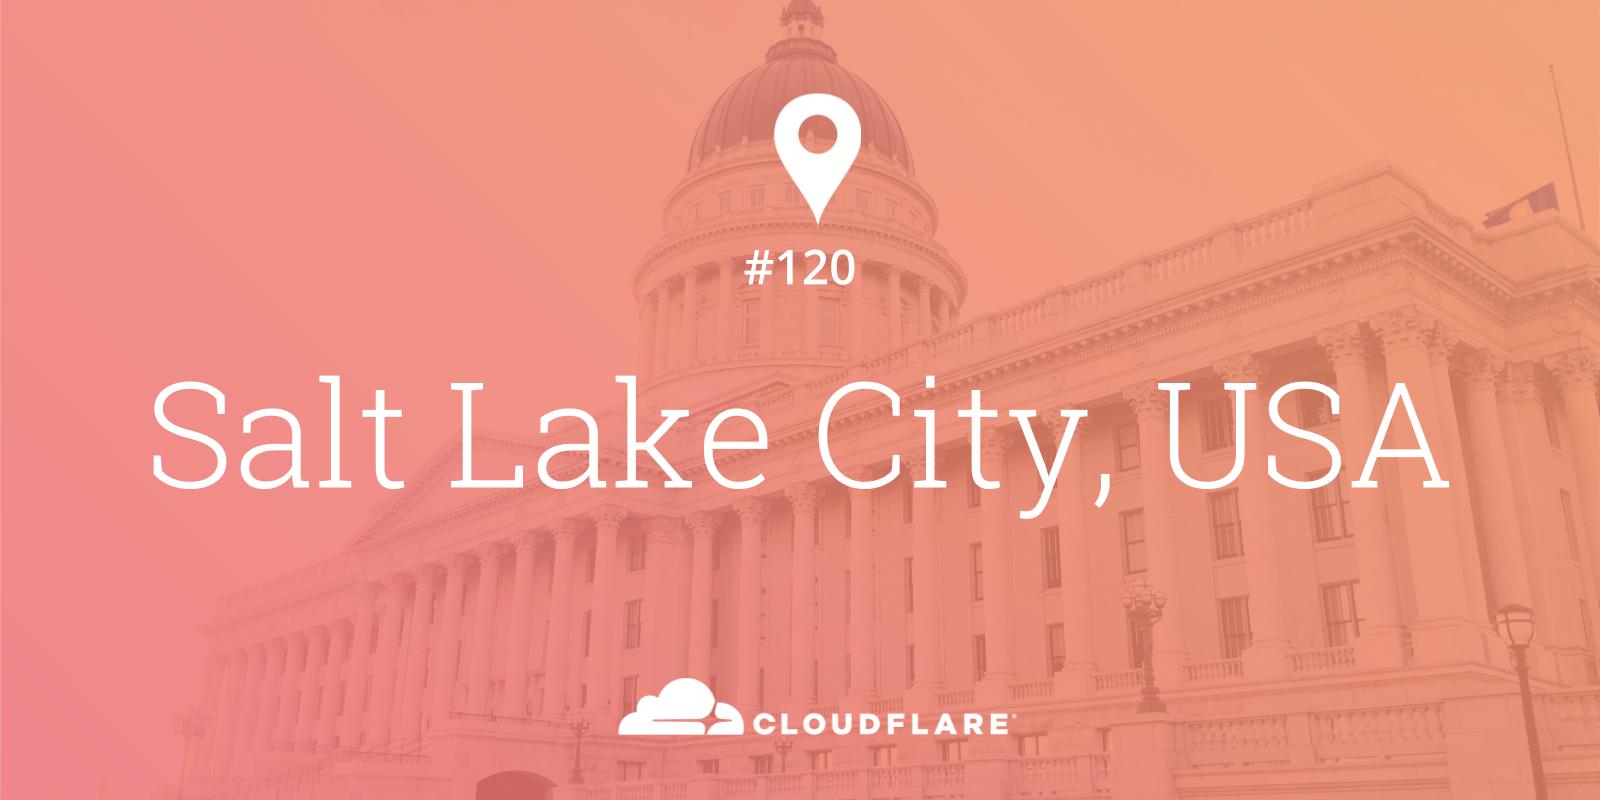 Salt Lake City, Cloudflare Data Center #120